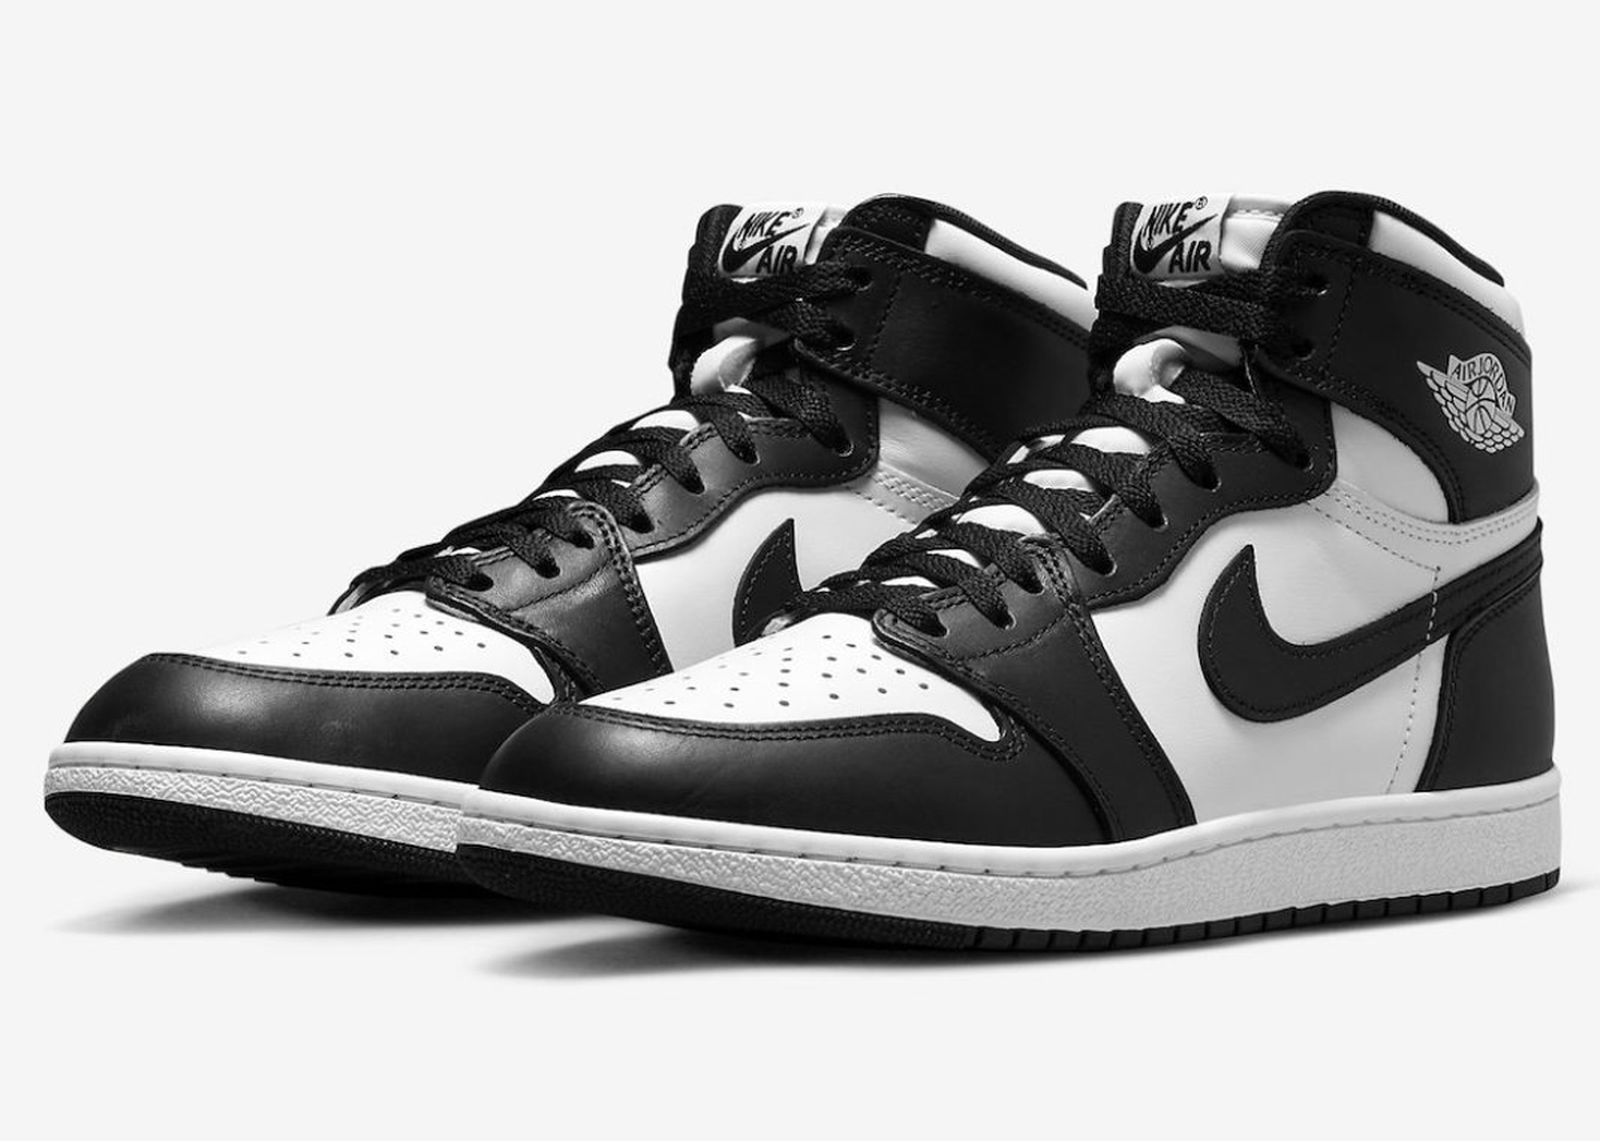 Ciudad Idealmente Animado Air Jordan 1 High '85 Black/White Sneakers: Release Date, Price